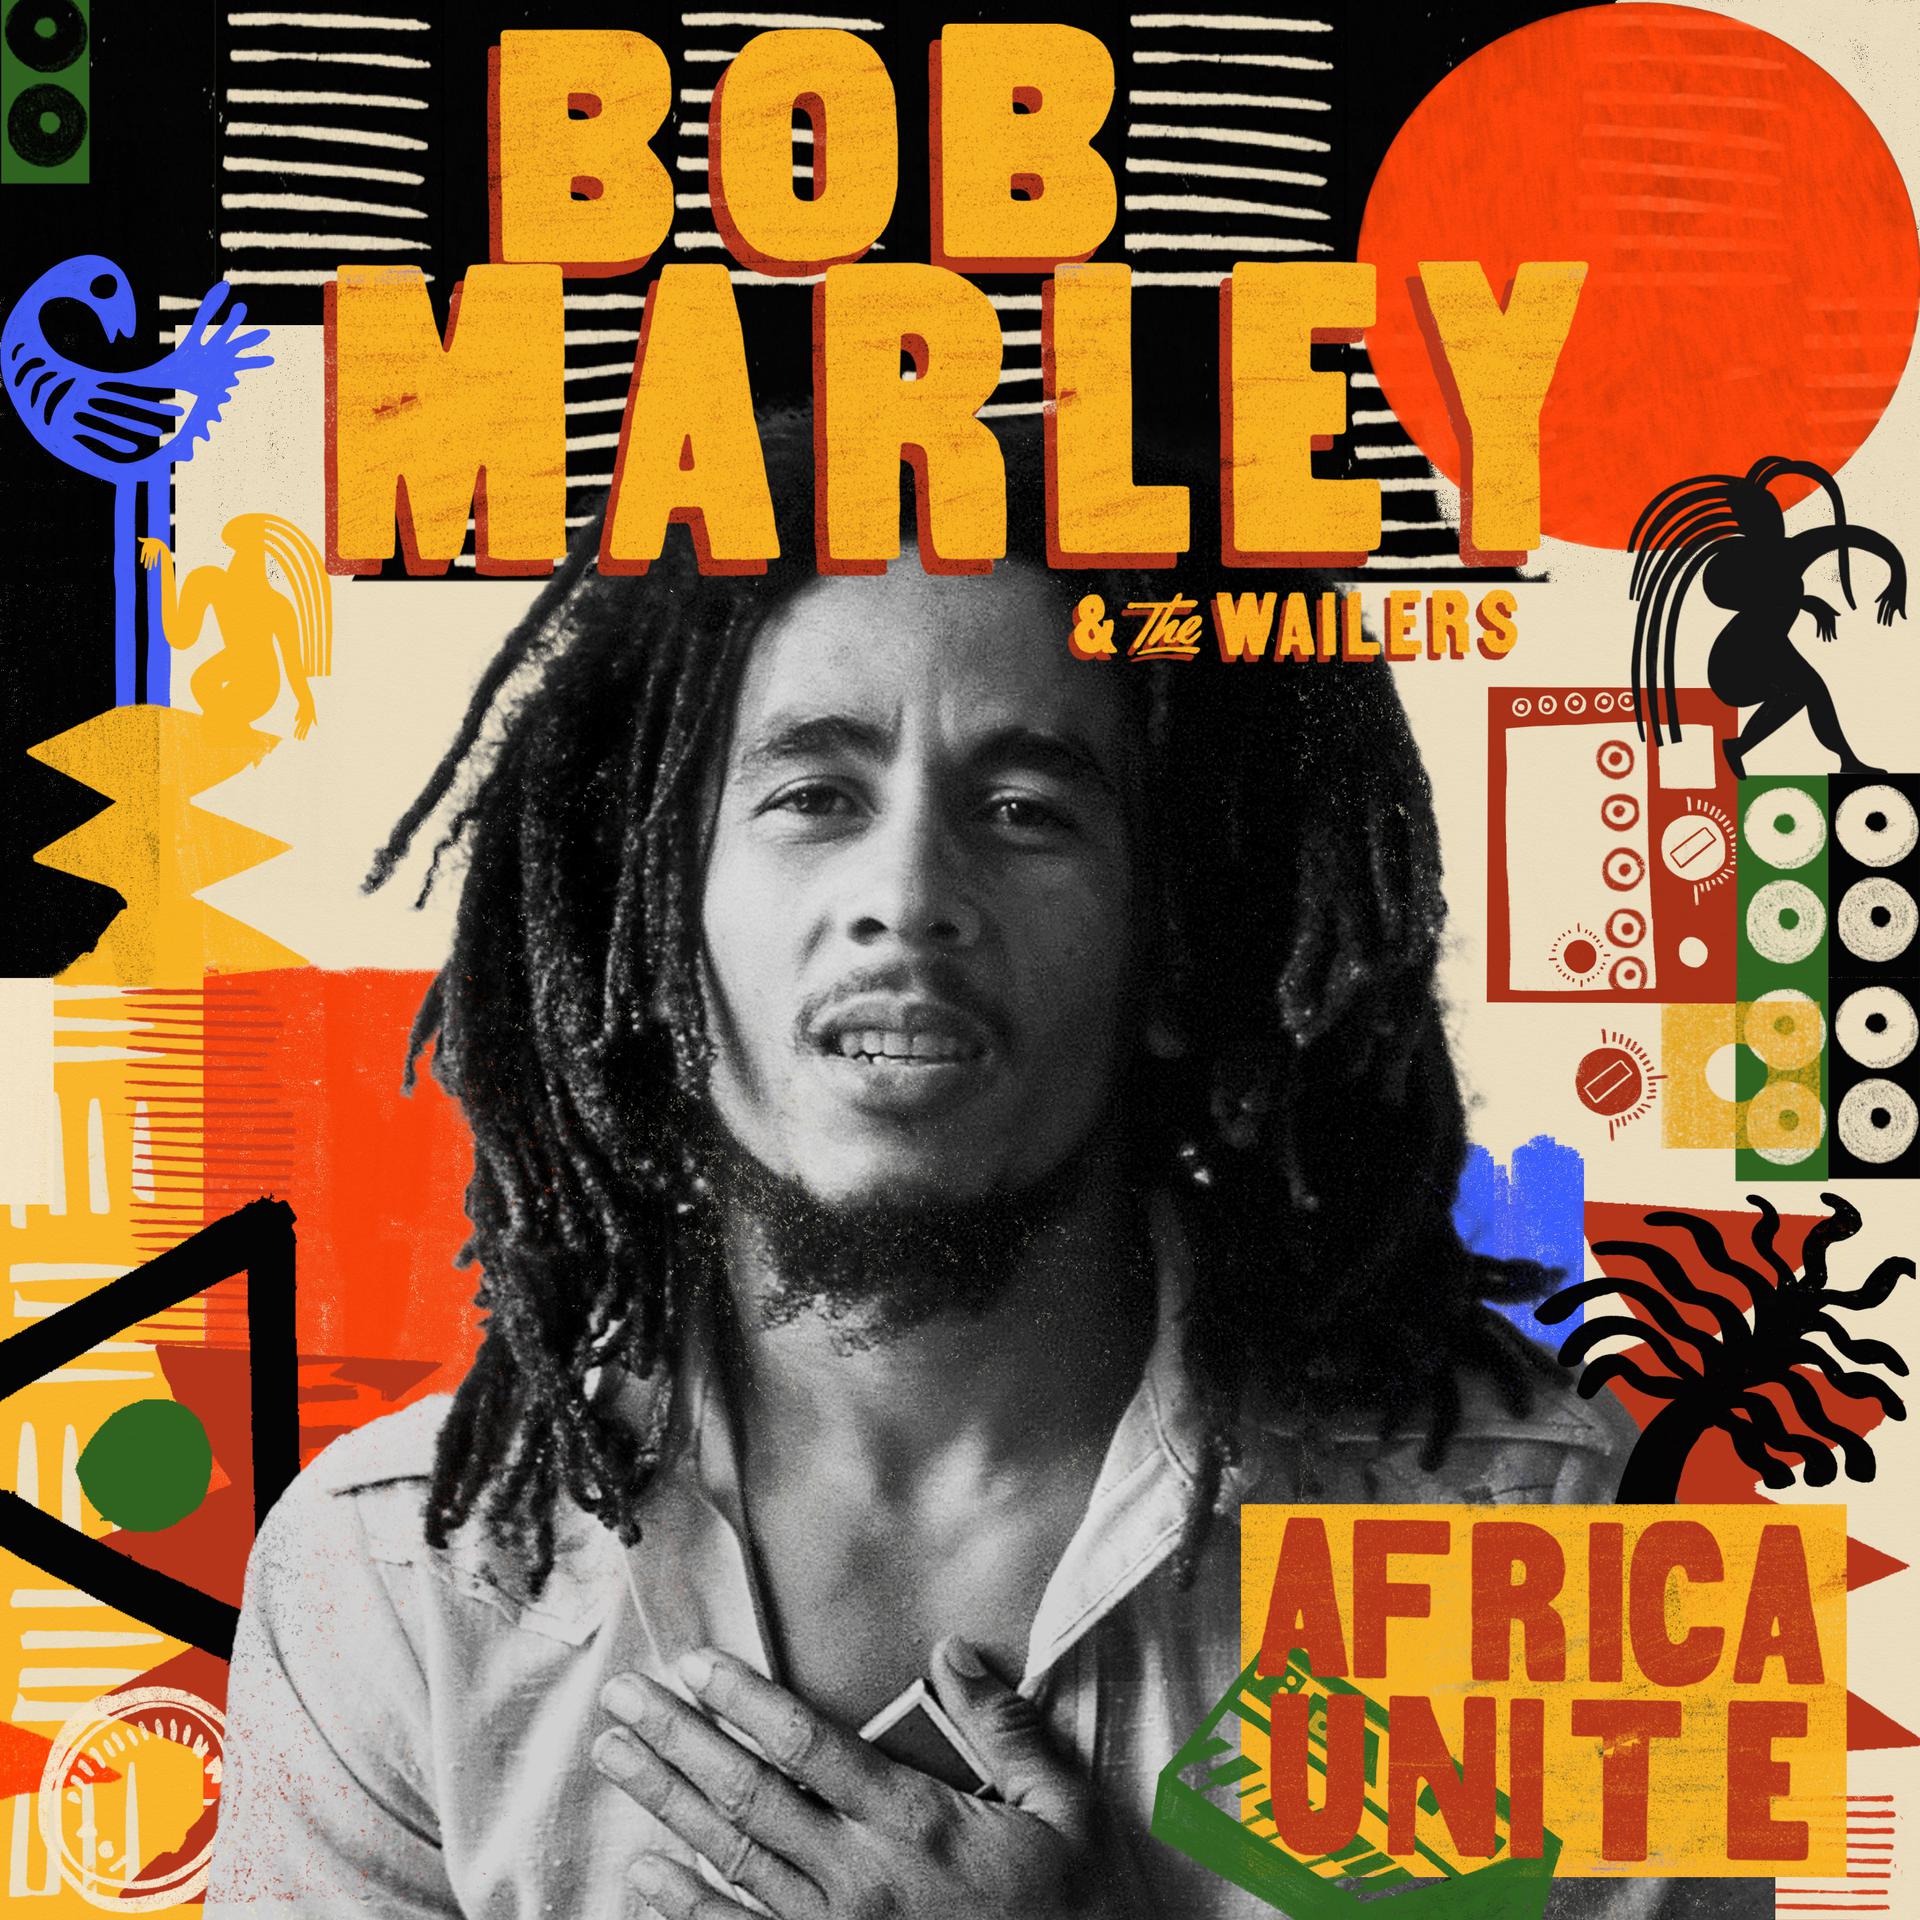 Bob Marley & The Wailers ‘Africa Unite’ album artwork